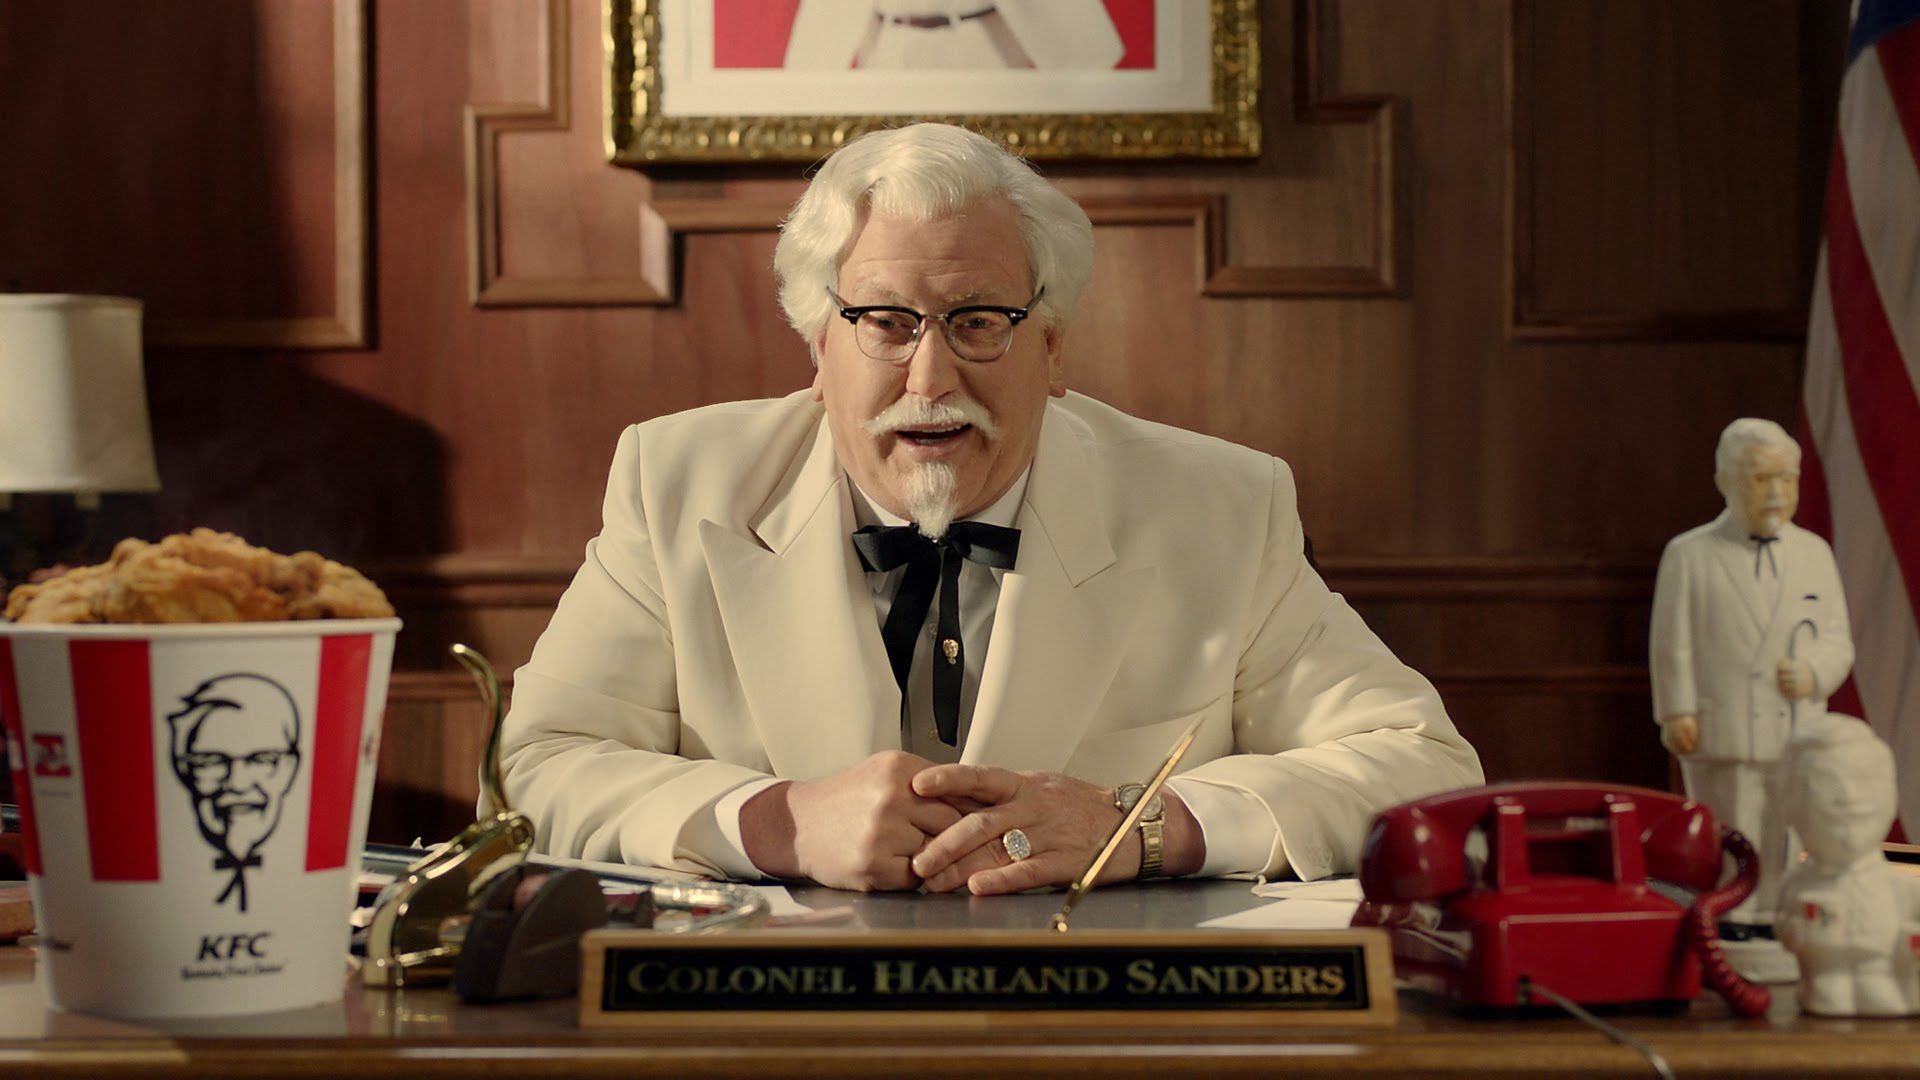 The State of Kentucky Fried Chicken Address. Colonel sanders, Kfc, Kentucky fried